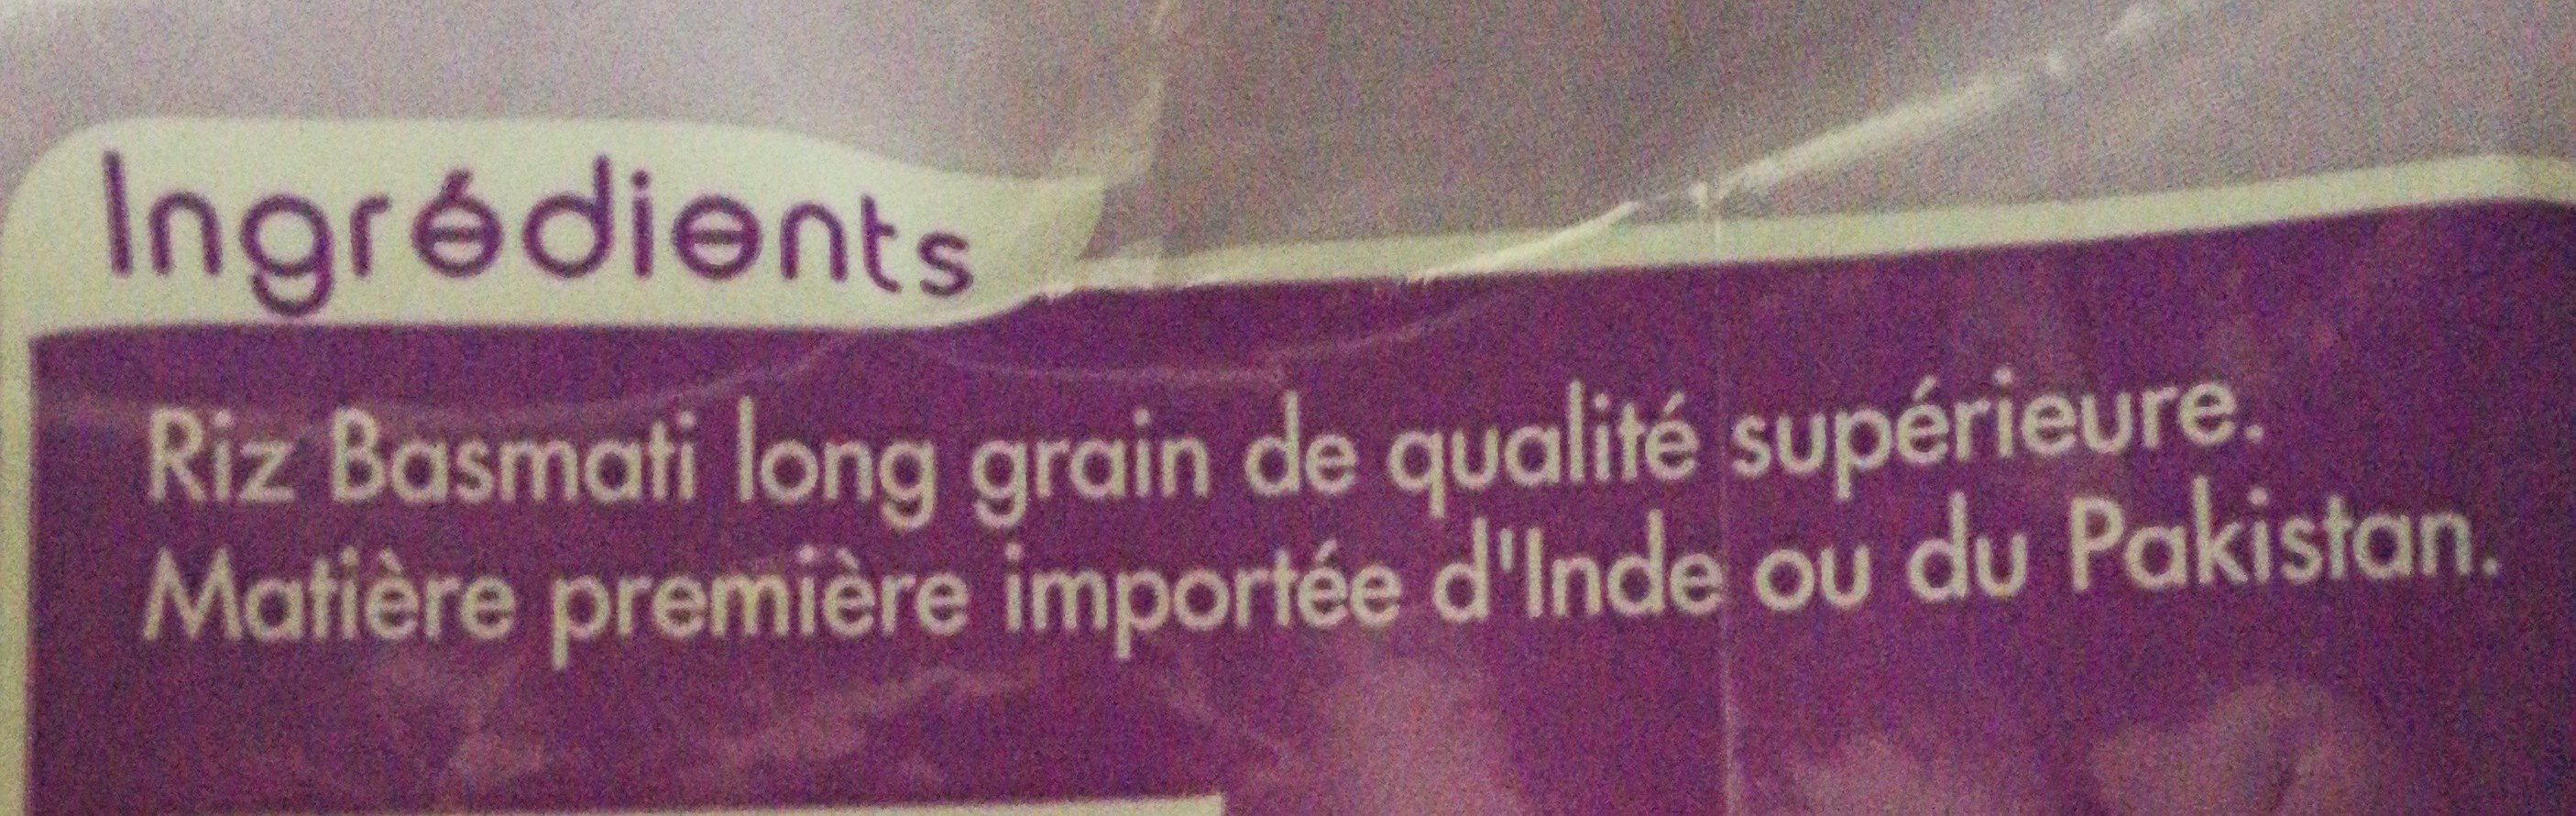 Riz long basmati - Ingredienti - fr